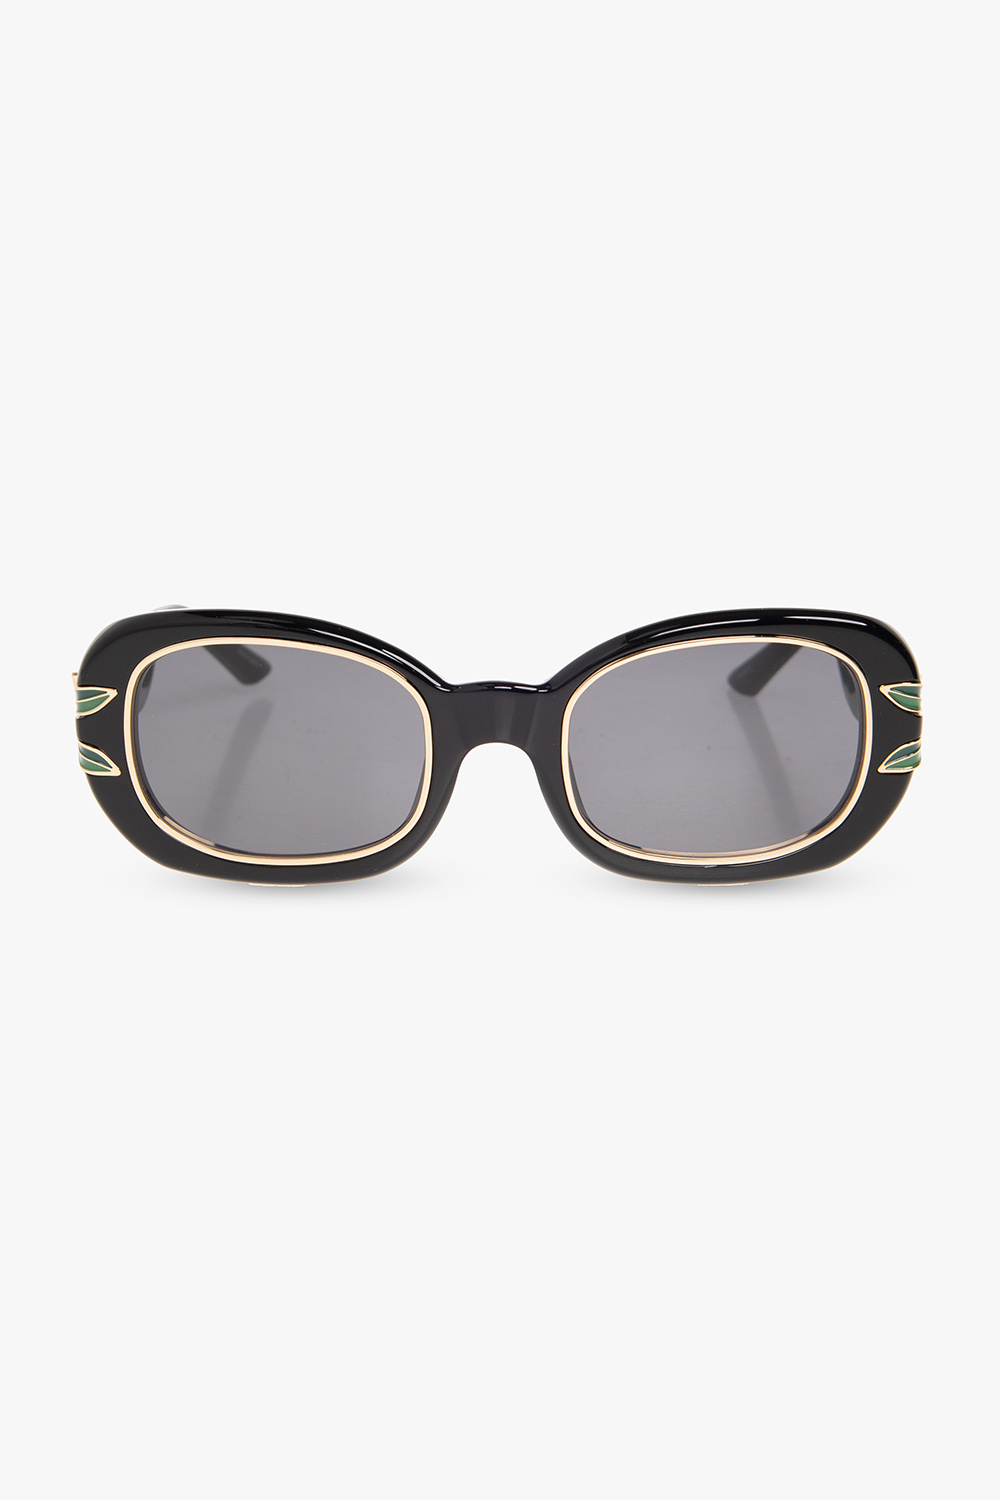 GenesinlifeShops Germany - Black s bag and dark sunglasses Casablanca -  Calvin Klein cat eye sunglasses in purple